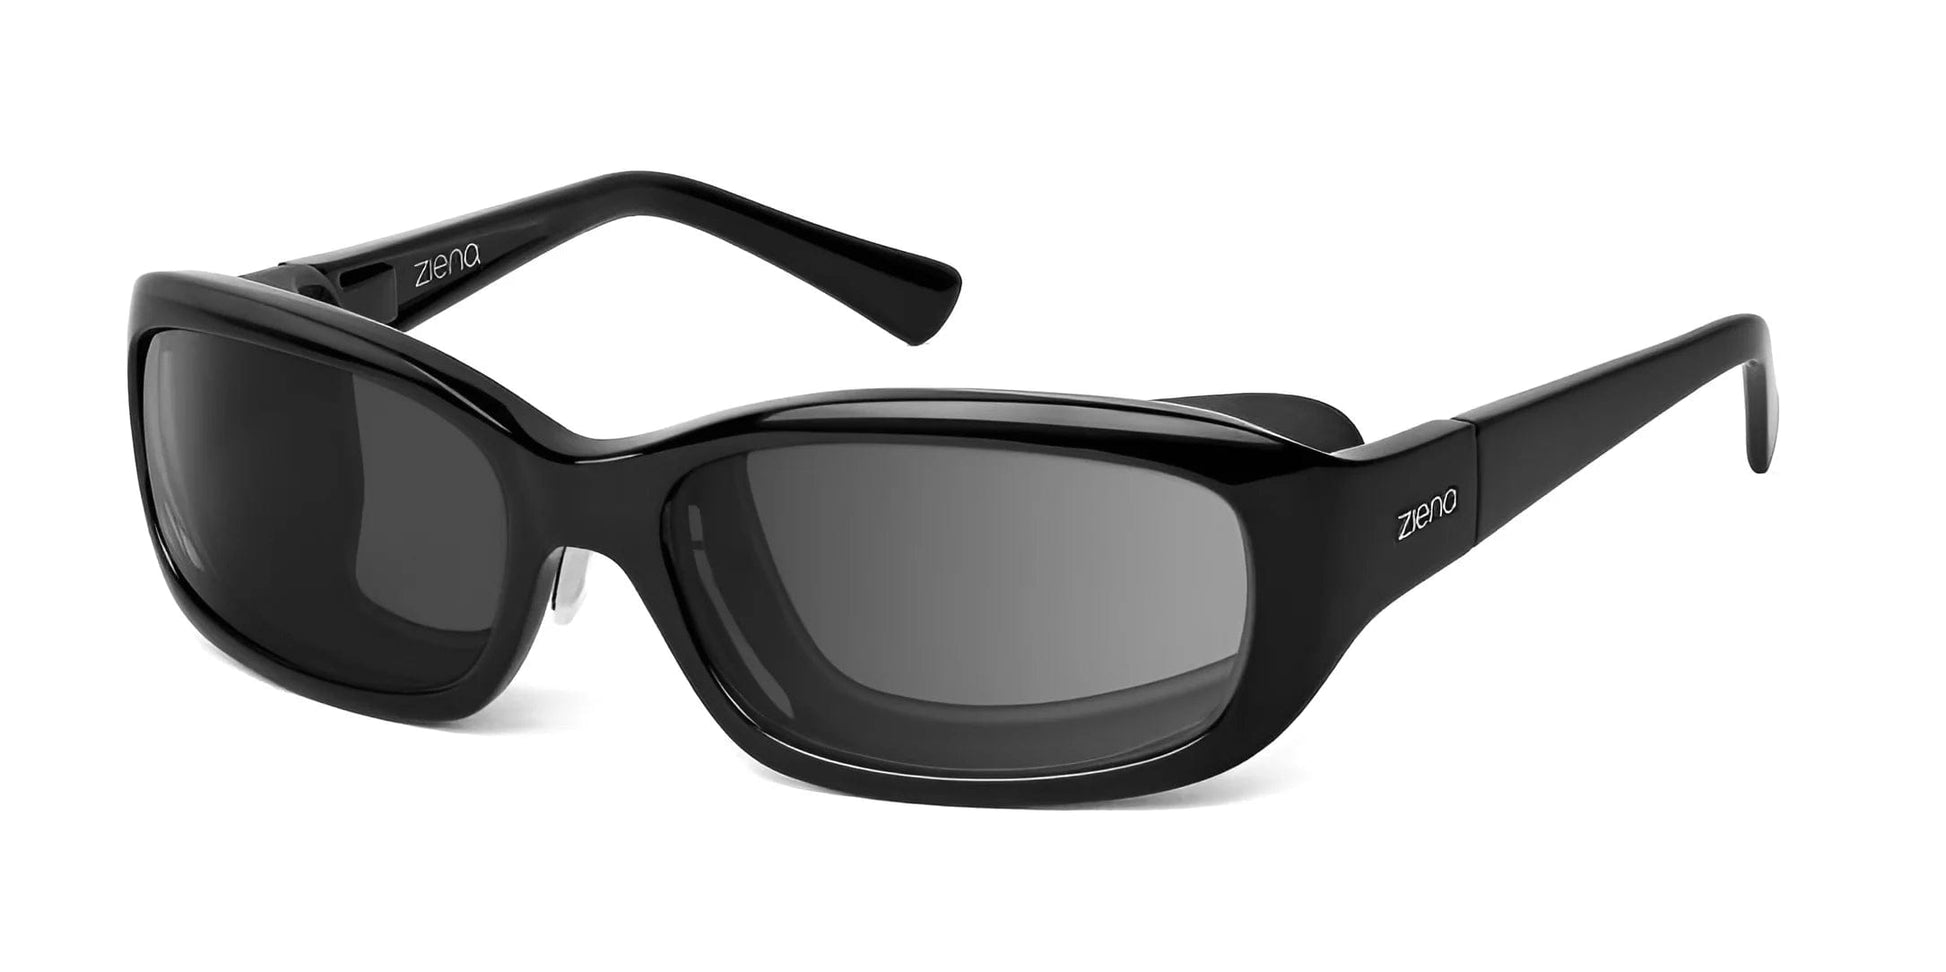 Ziena Verona Sunglasses Glossy Black / DARKshift™ Photochromic - Clr to DARK Gray / Black